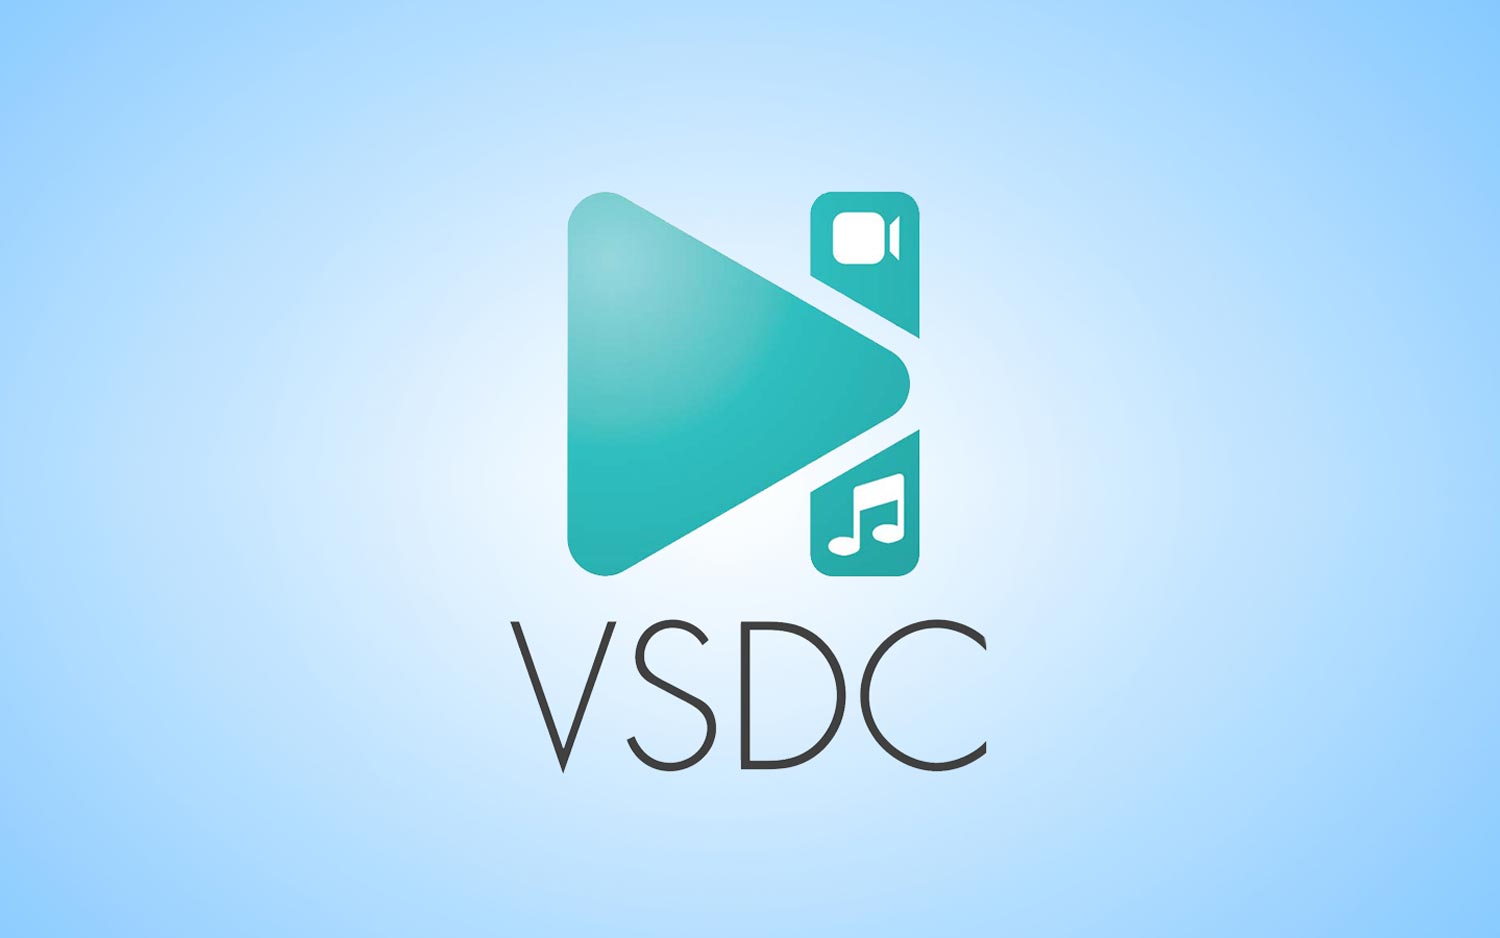 vsdc video editor transitions